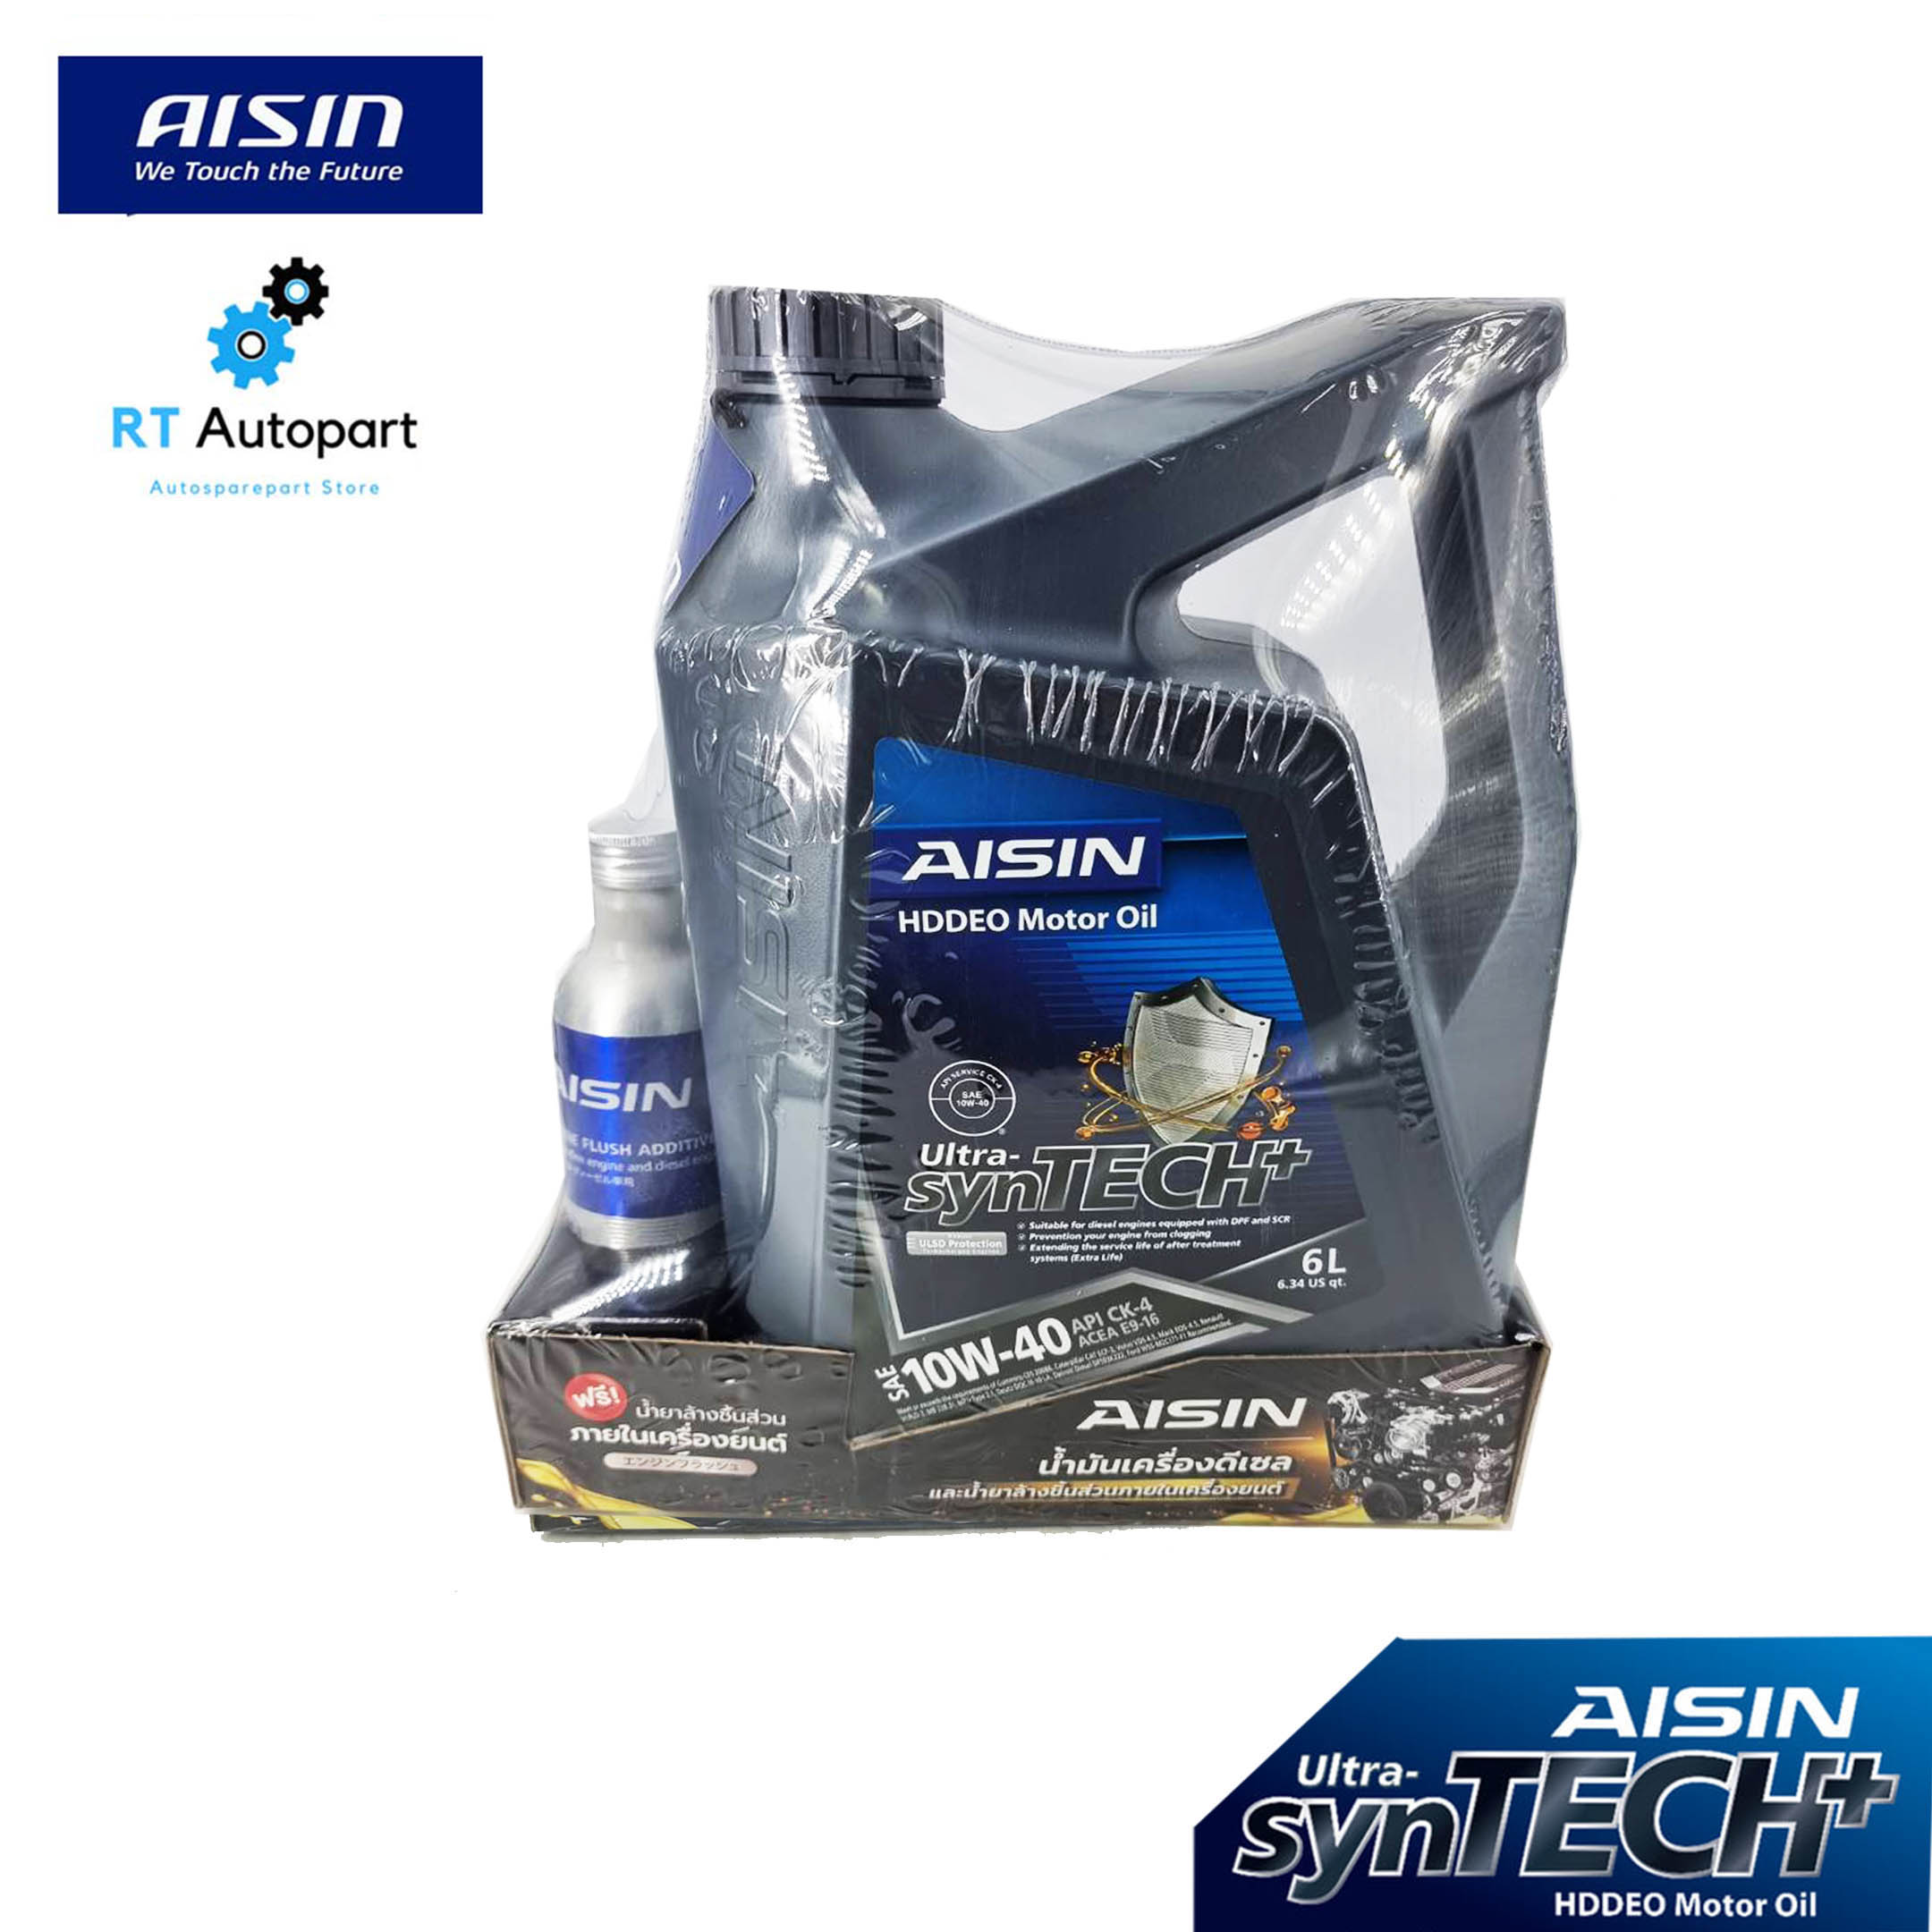 Aisin น้ำมันเครื่องสังเคราะห์ Aisin Ultra-synTECH+ HDDEO 10w40 / 10w-40 ดีเชล CK4 ขนาด 6ลิตร ** ชุดโปรแถมน้ำยา **